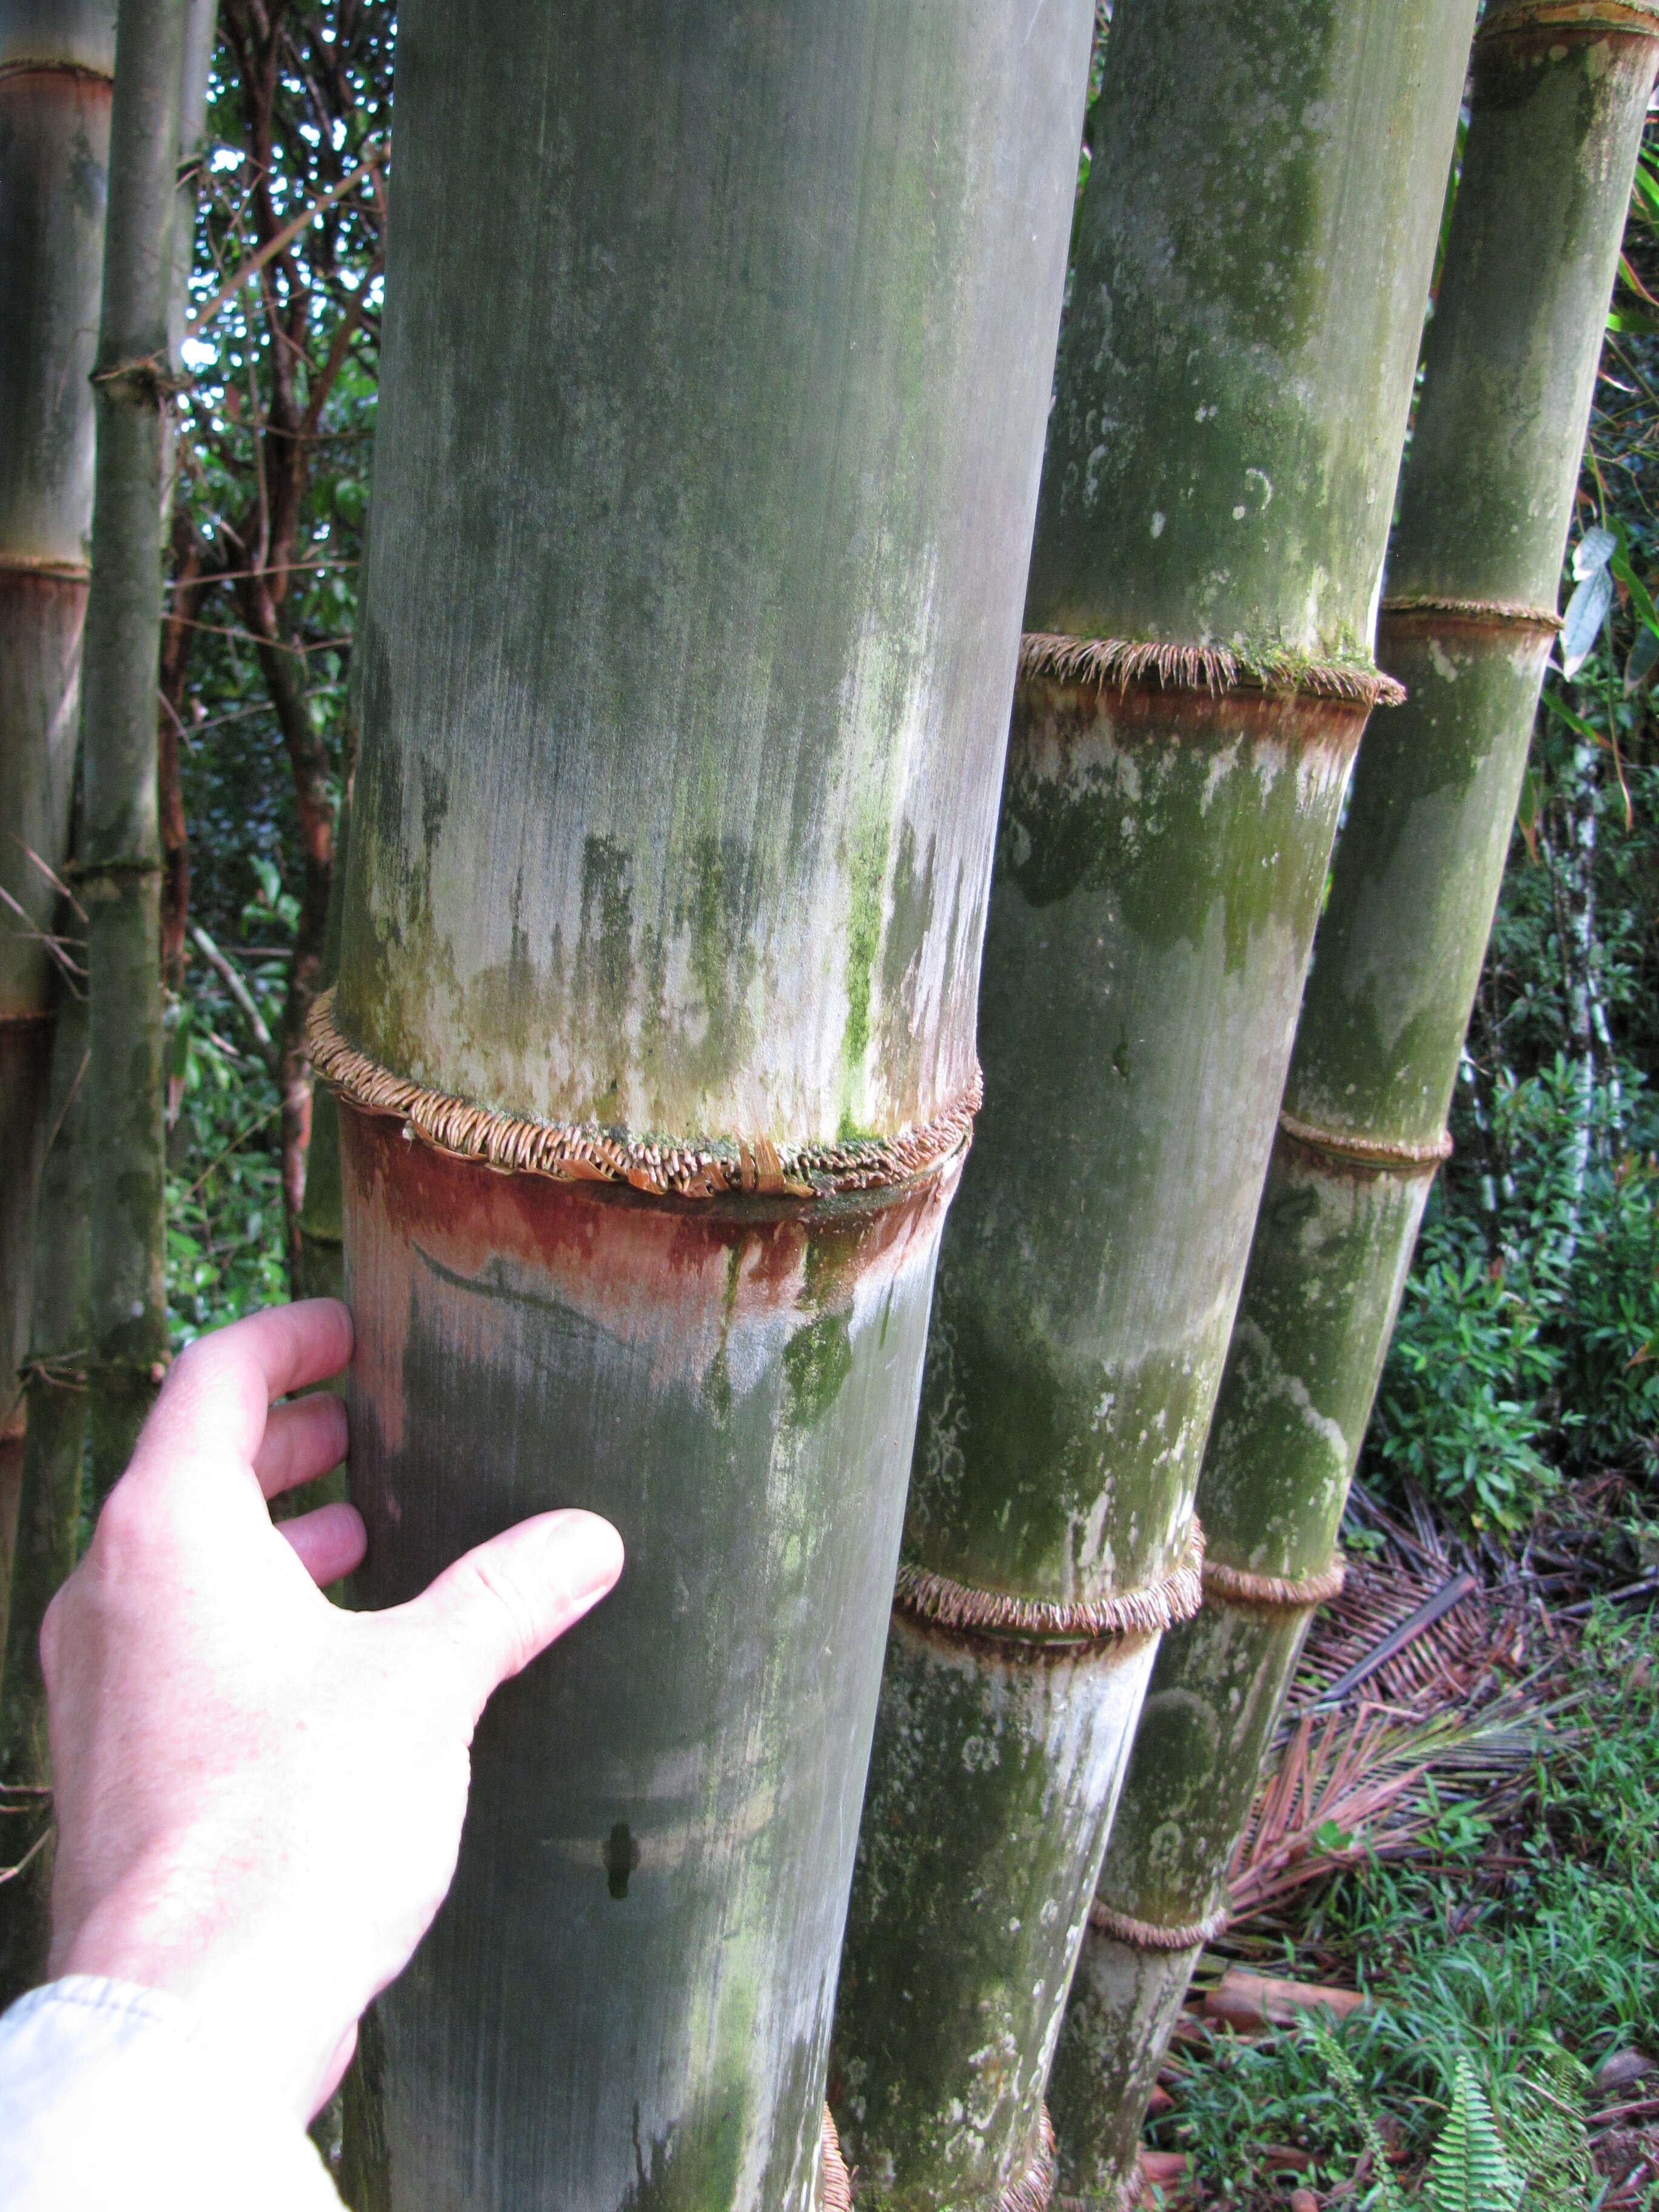 Image of giant bamboo